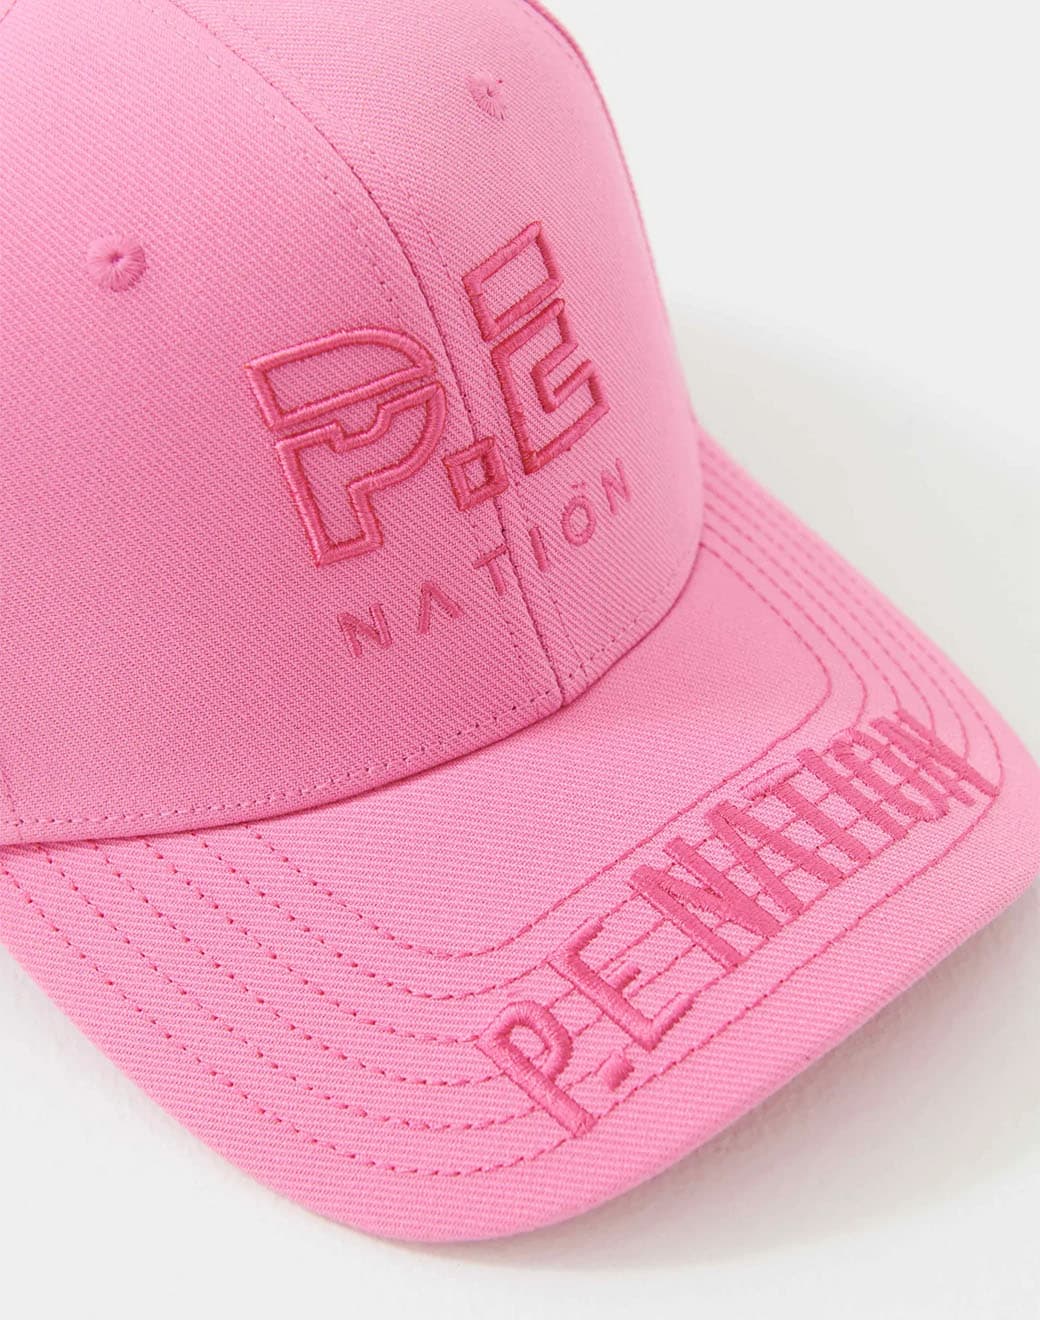 Courtside Cap in Paloma Pink Kadın Şapka - Stilefit